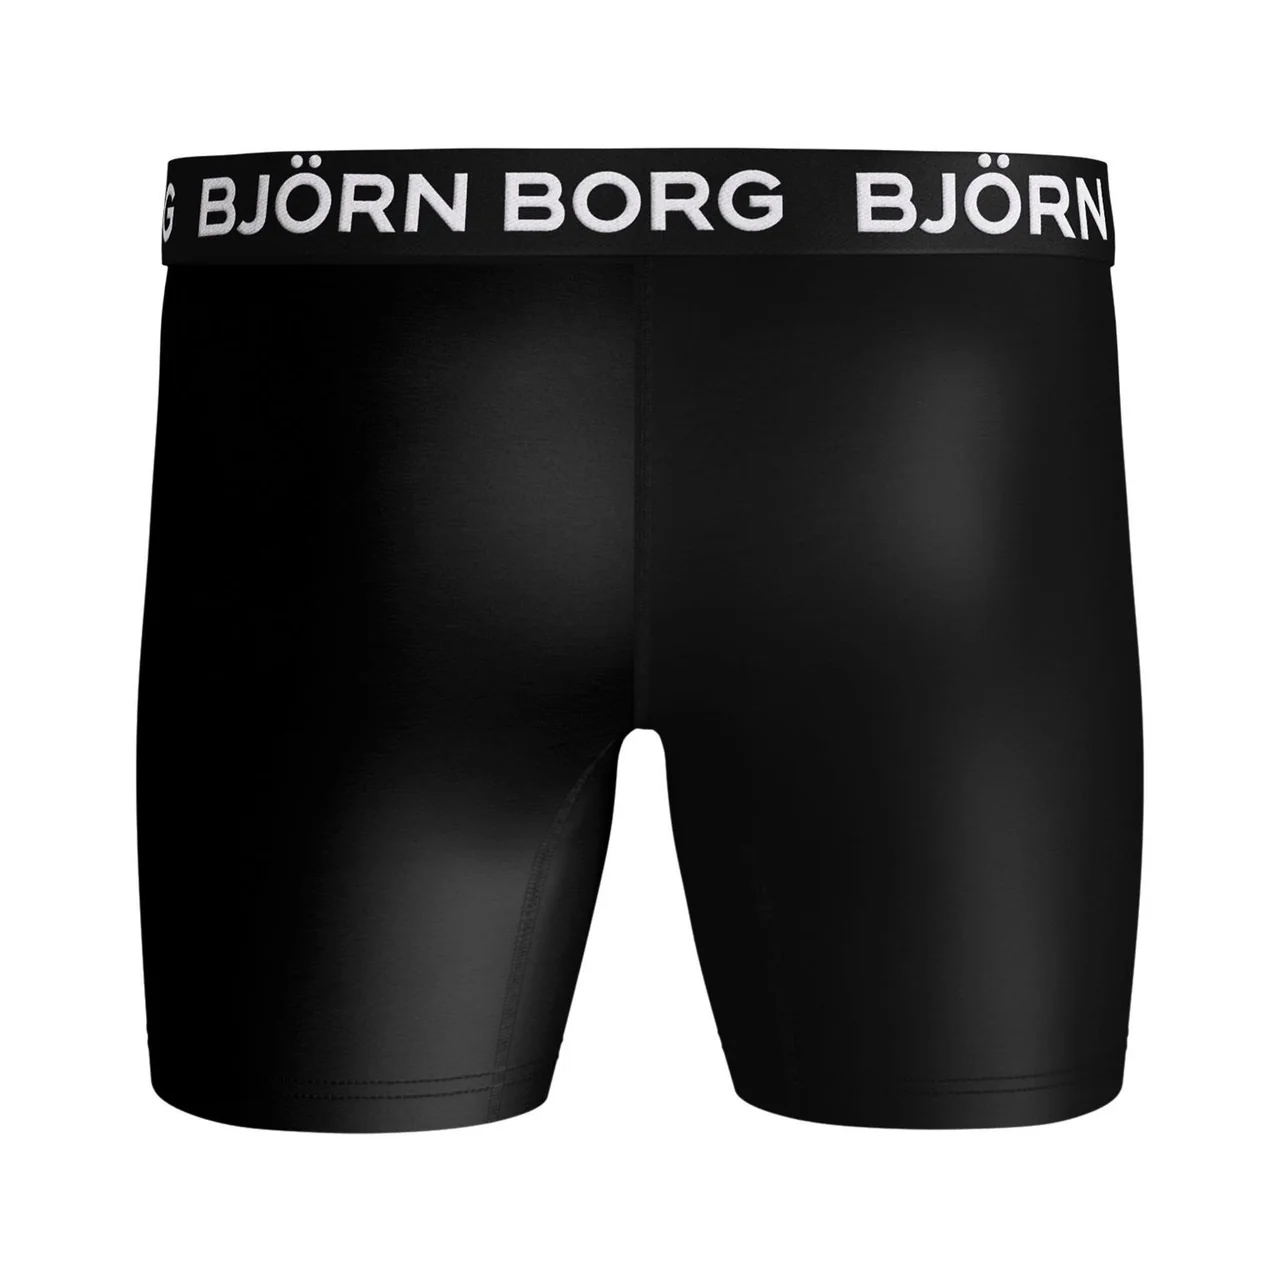 Björn Borg Performance Boxer Black/Speckled 2-pack